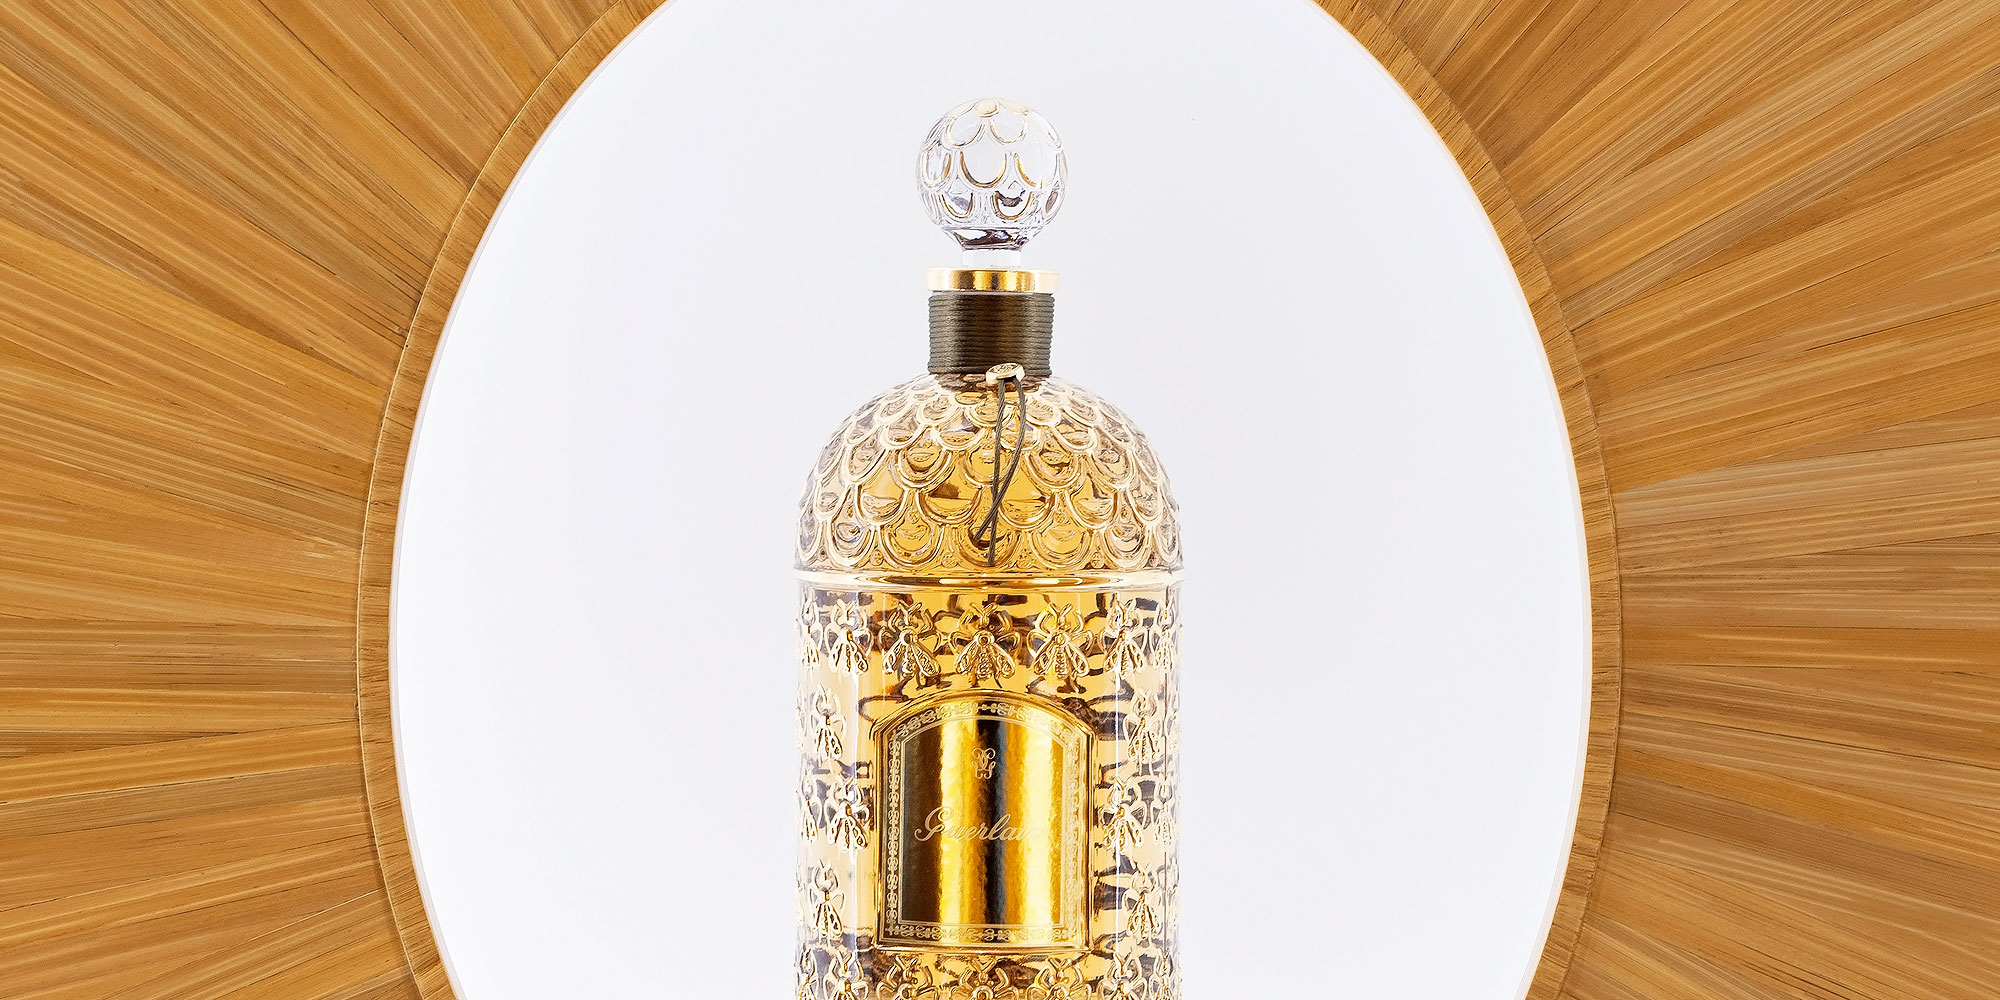 Maison Guerlain Perfumery by Peter Marino Architects — KNSTRCT